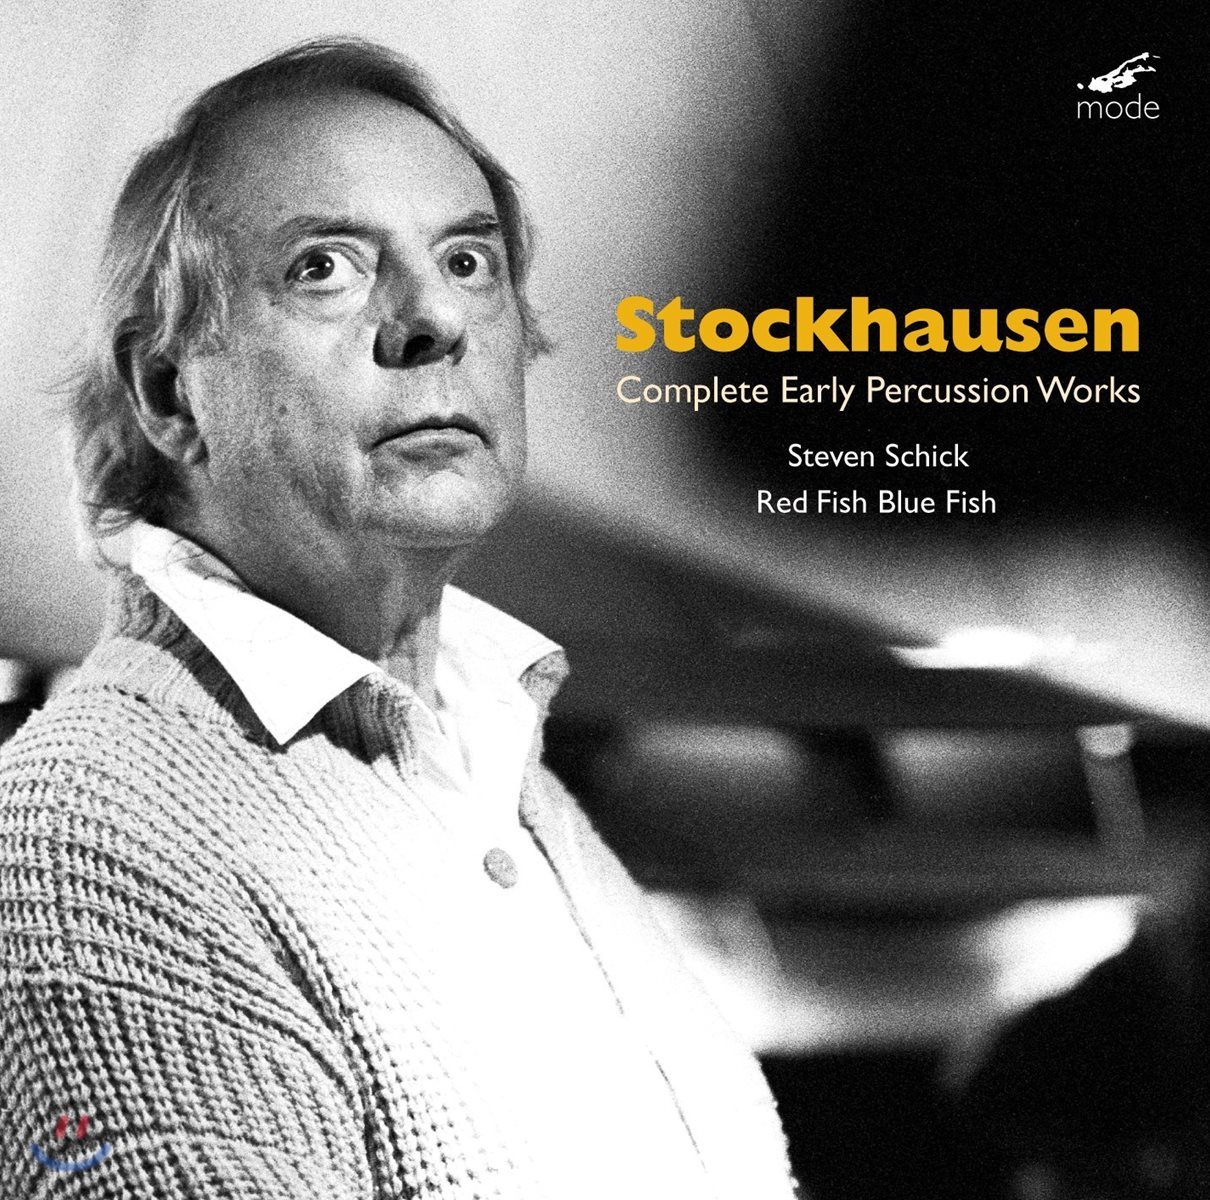 Steven Schick 슈톡하우젠: 초기 타악기 작품 전곡 - 스티븐 쉬크, 레드 피시 블루 피시 (Stockhausen: Complete Early Percussion Works)